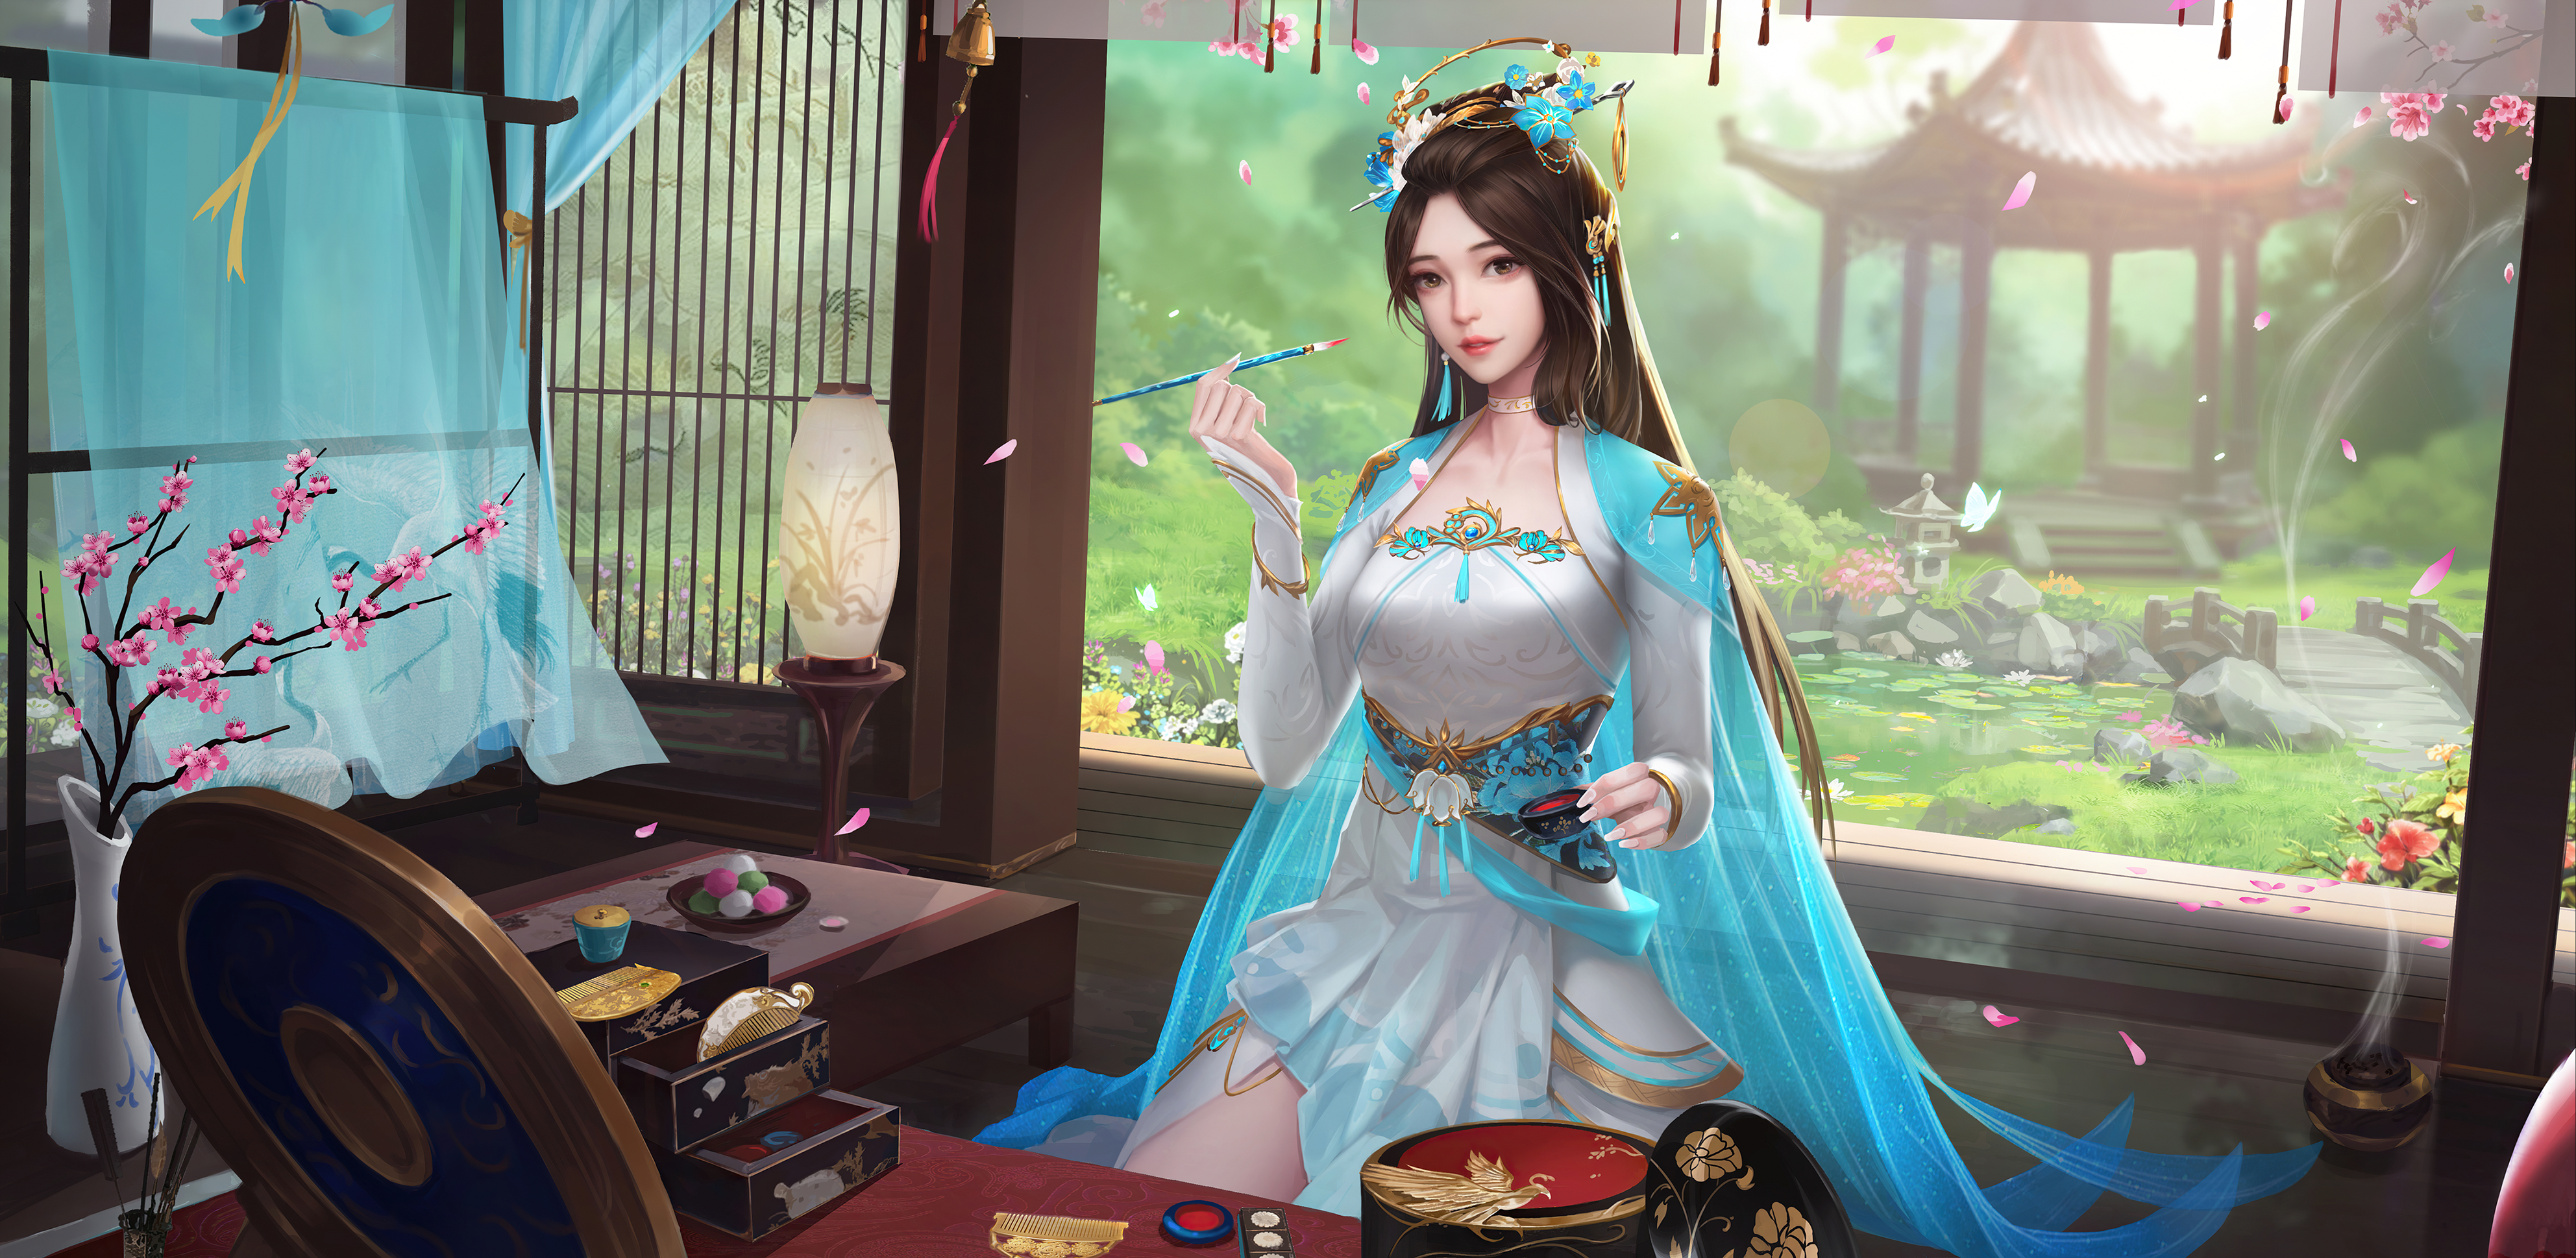 General 3969x1939 Three Kingdoms video game characters video game girls video game art petals flowers Asian